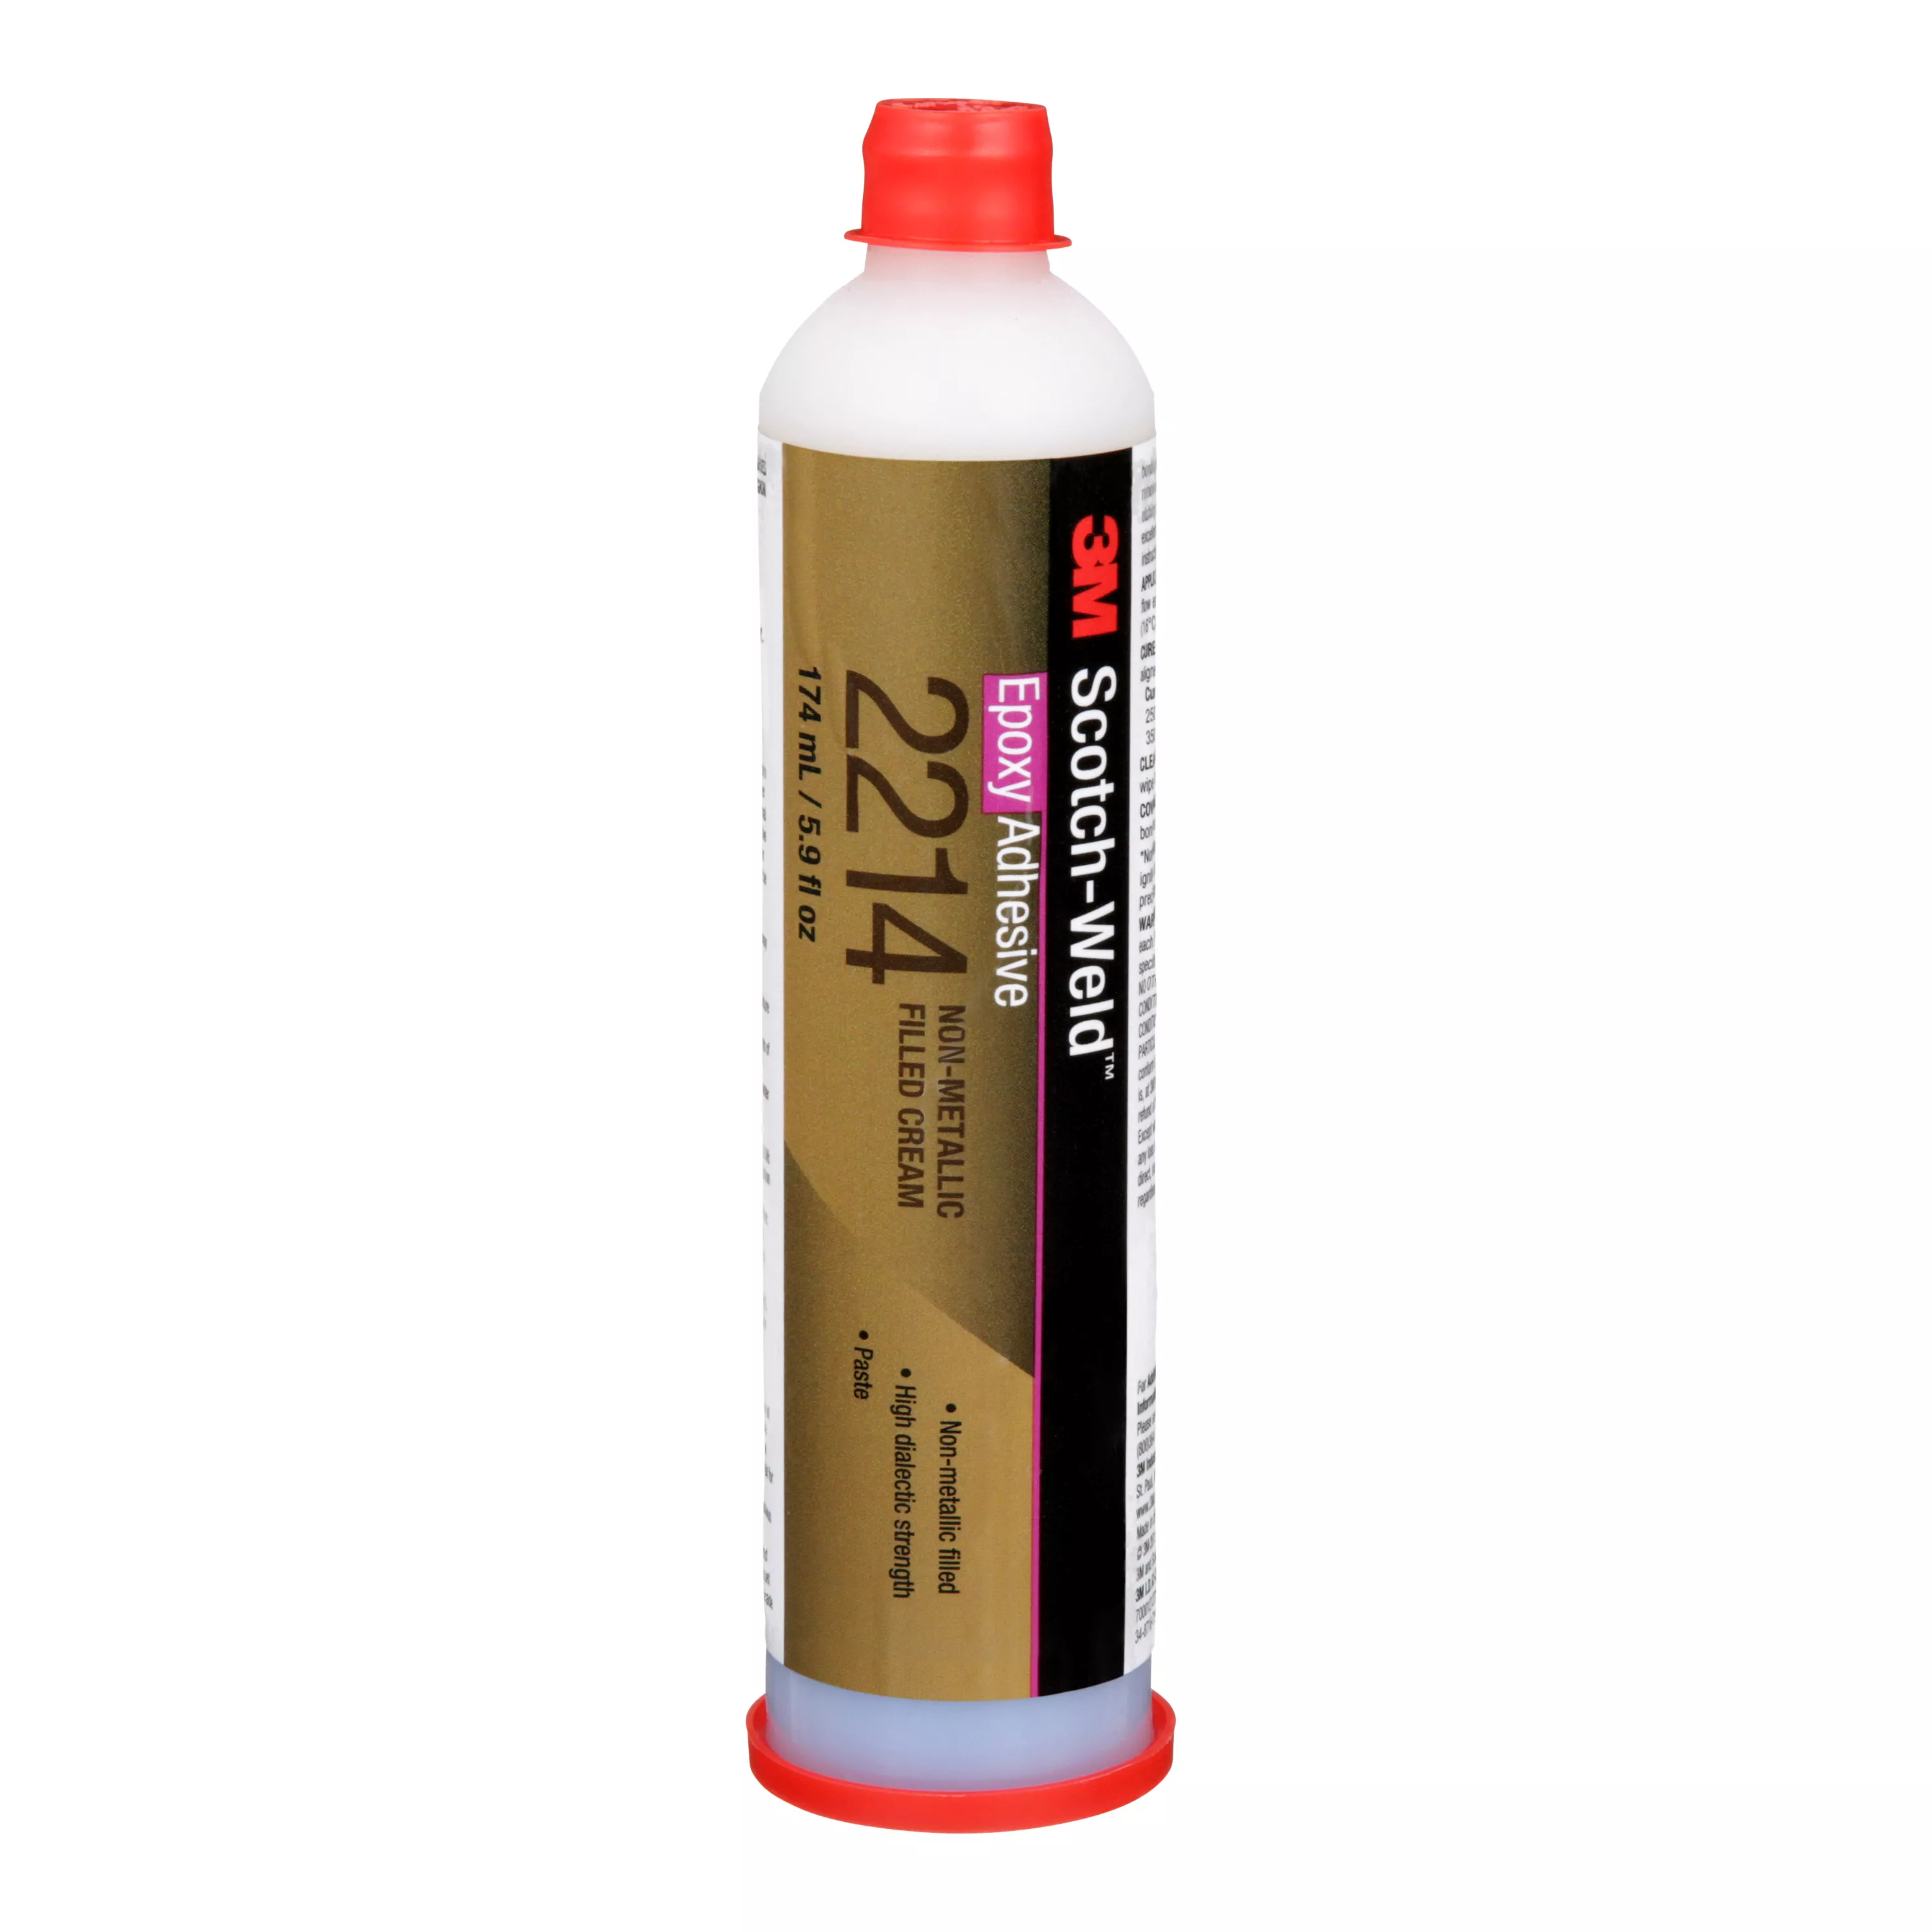 3M™ Scotch-Weld™ Epoxy Adhesive 2214, Non-Metallic Filled, Cream, 6 oz
Cartridge, 4 Each/Case